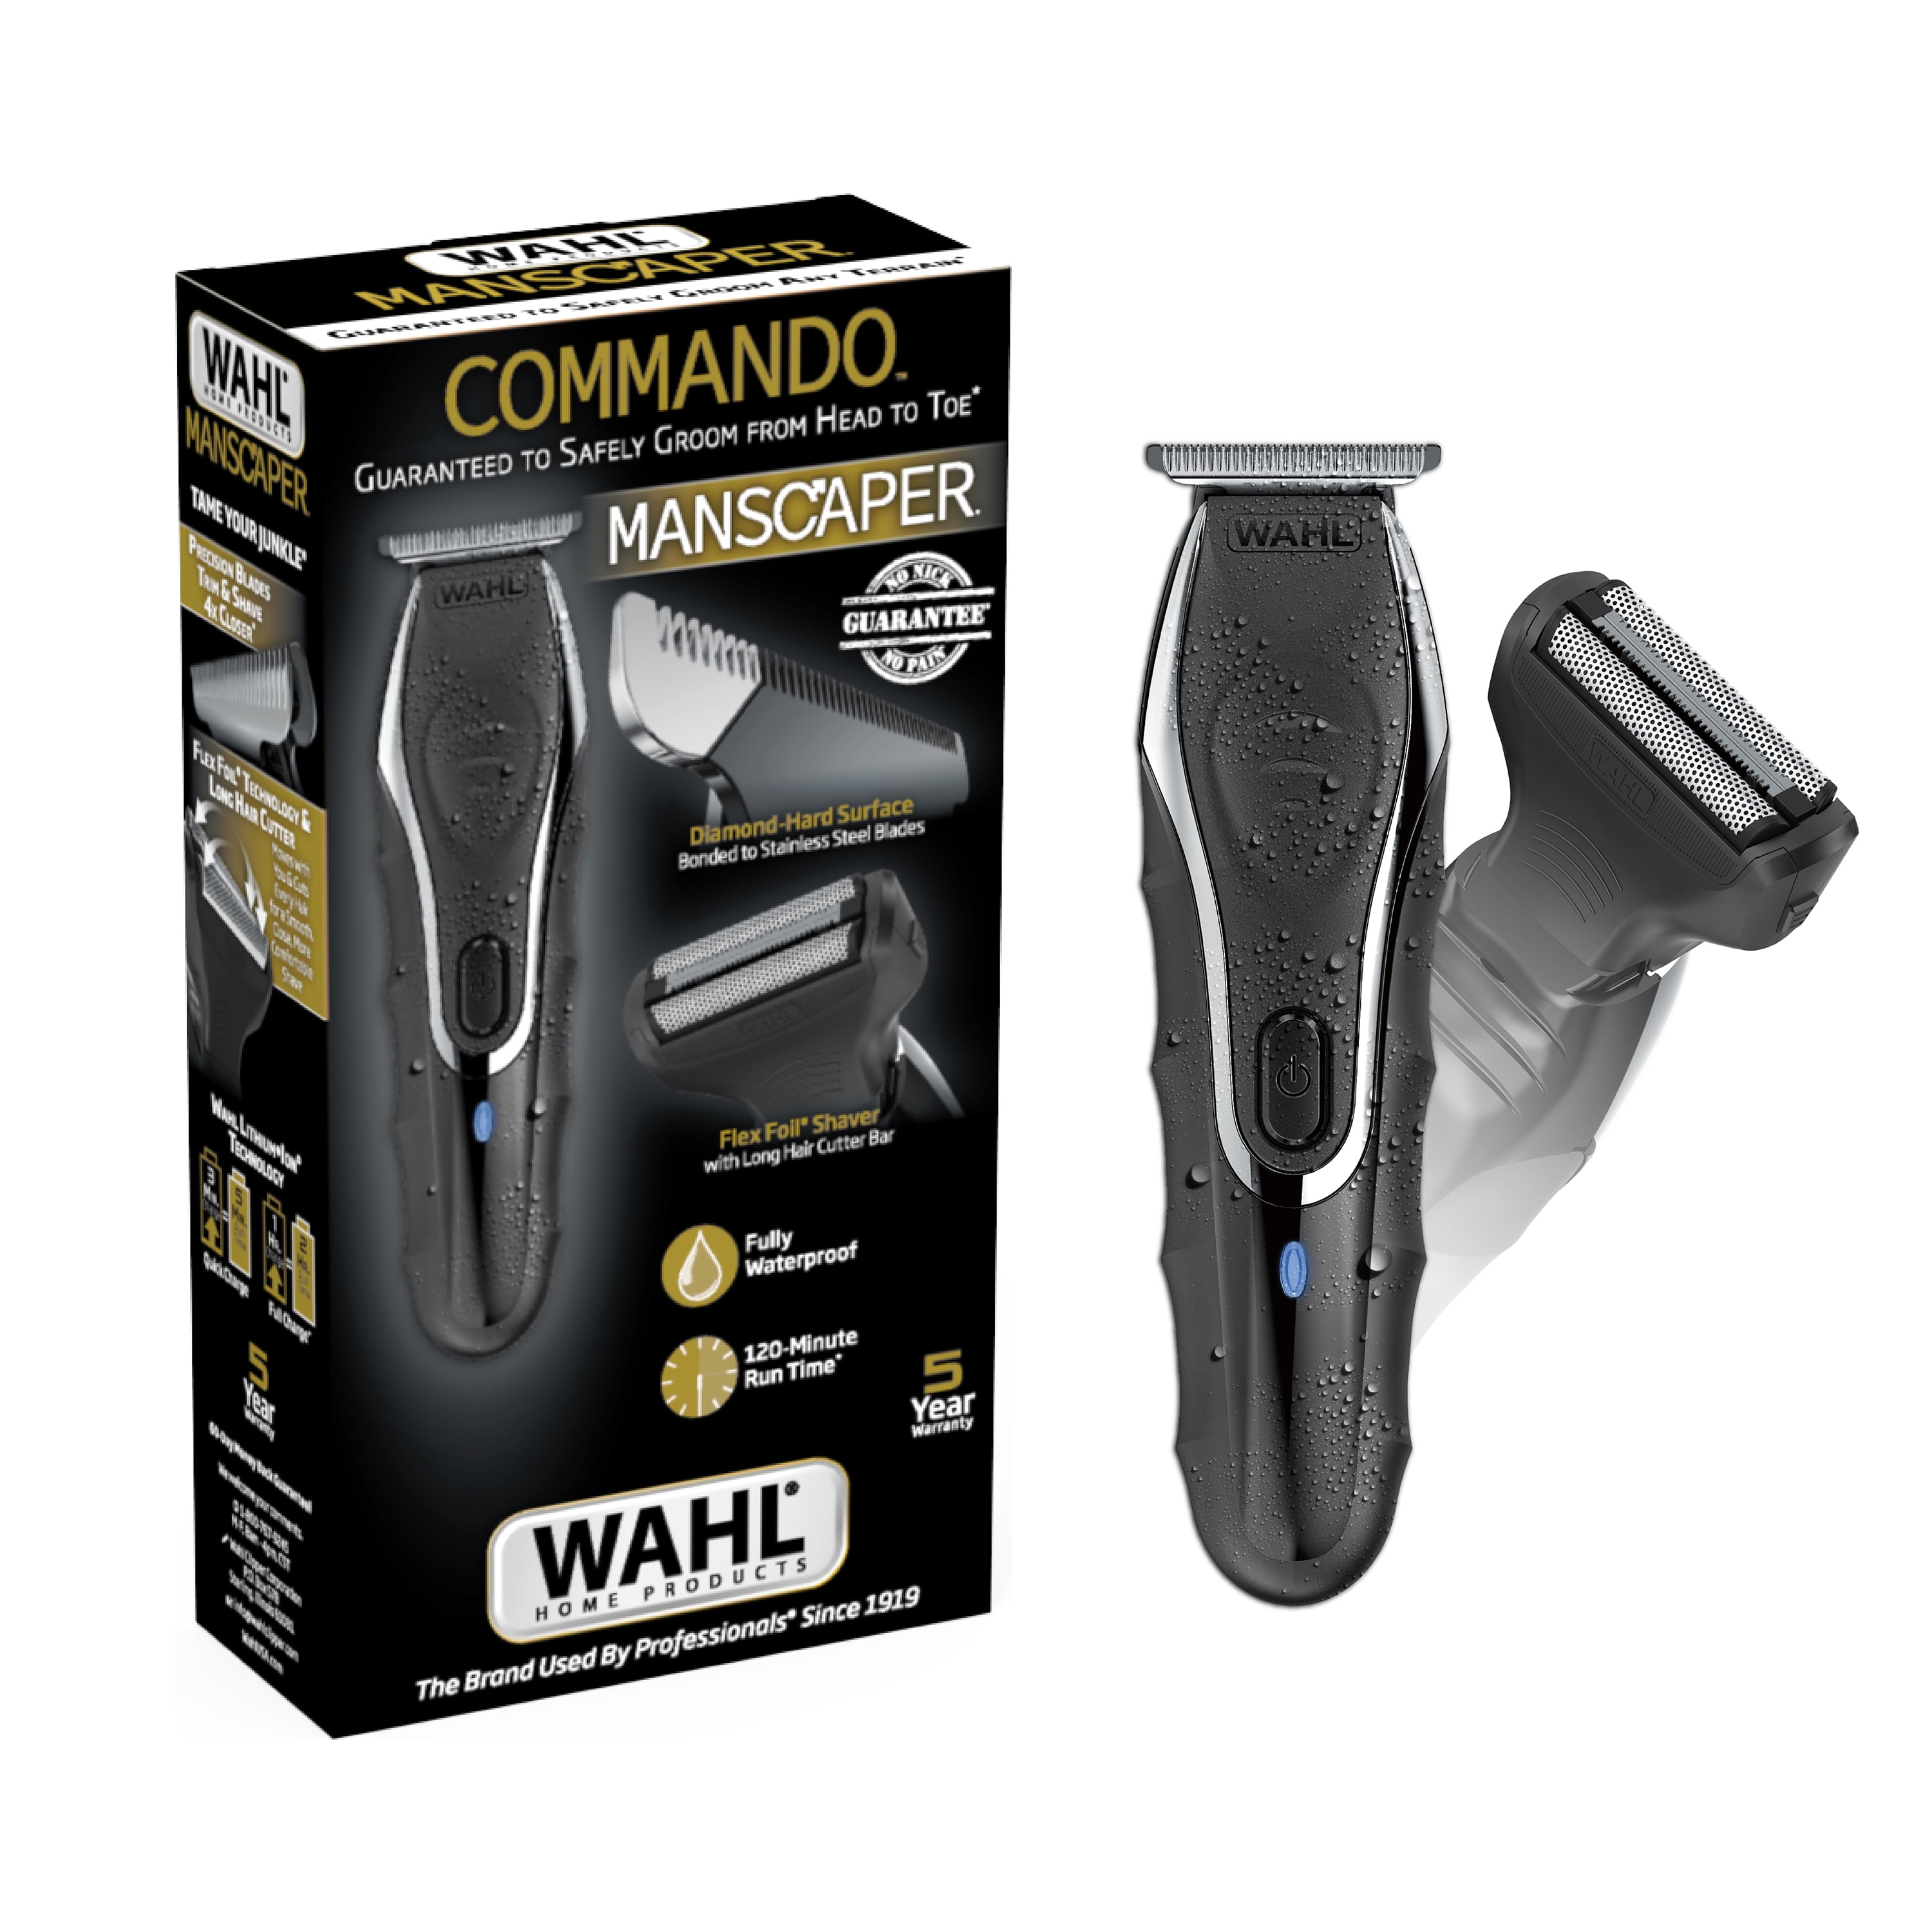 Commando Wet/Dry Trimmer Body Groomer, 3024497 - Walmart.com